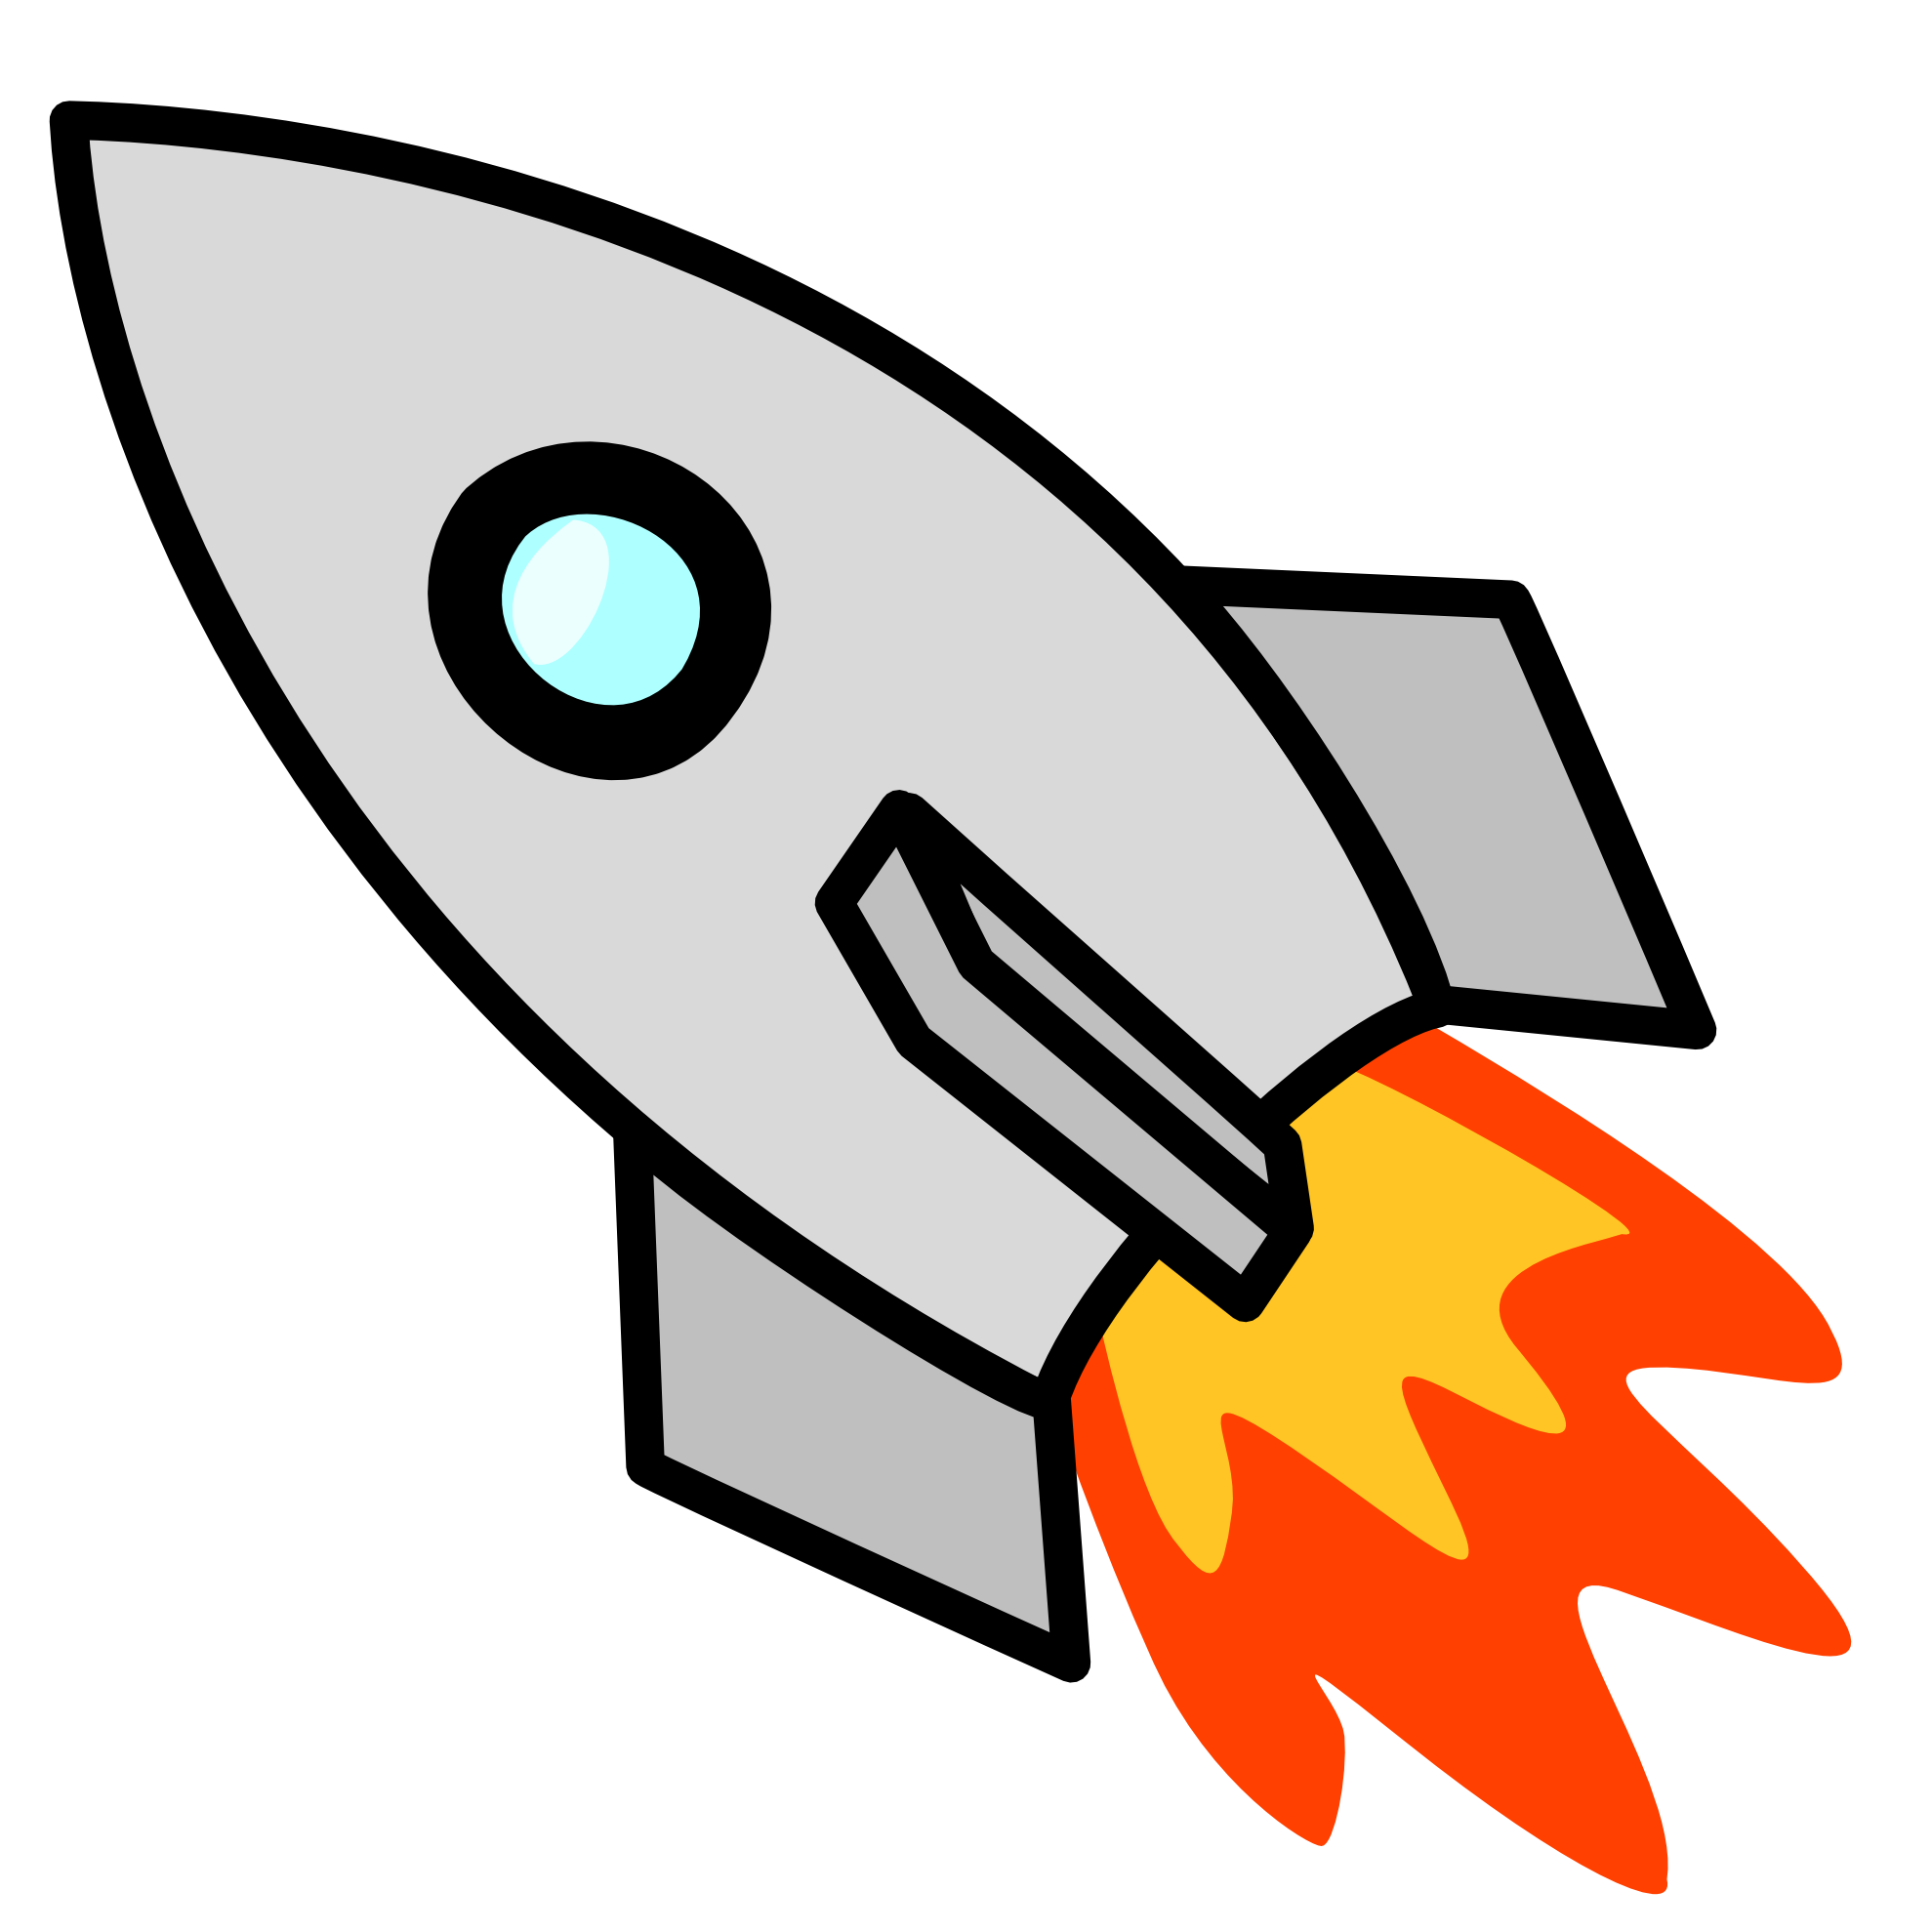 Rocket clip art - Free Clipart Images